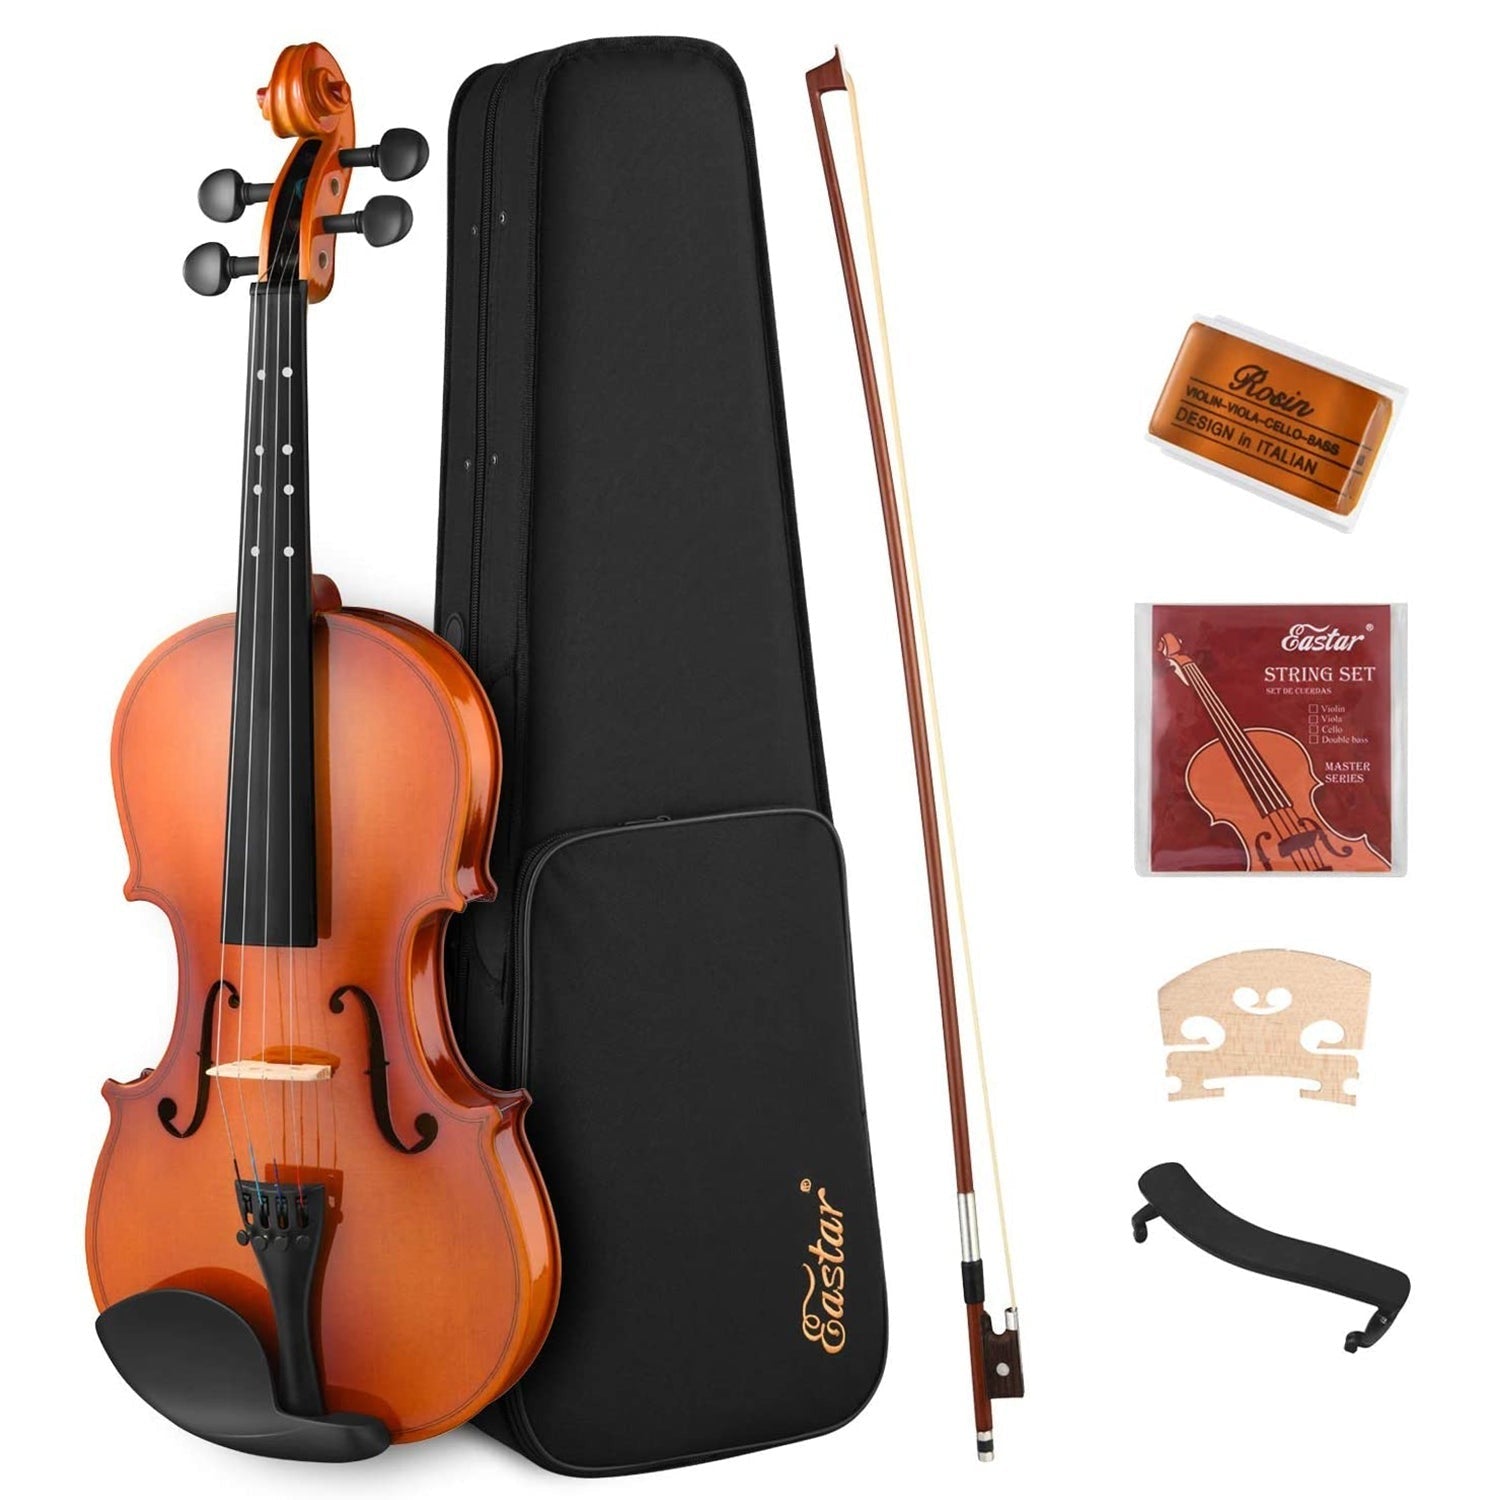 

Eastar EVA-2 3/4 Violin Set for Beginners with Hard Case/Rosin/Shoulder Rest/Bow/Extra Strings